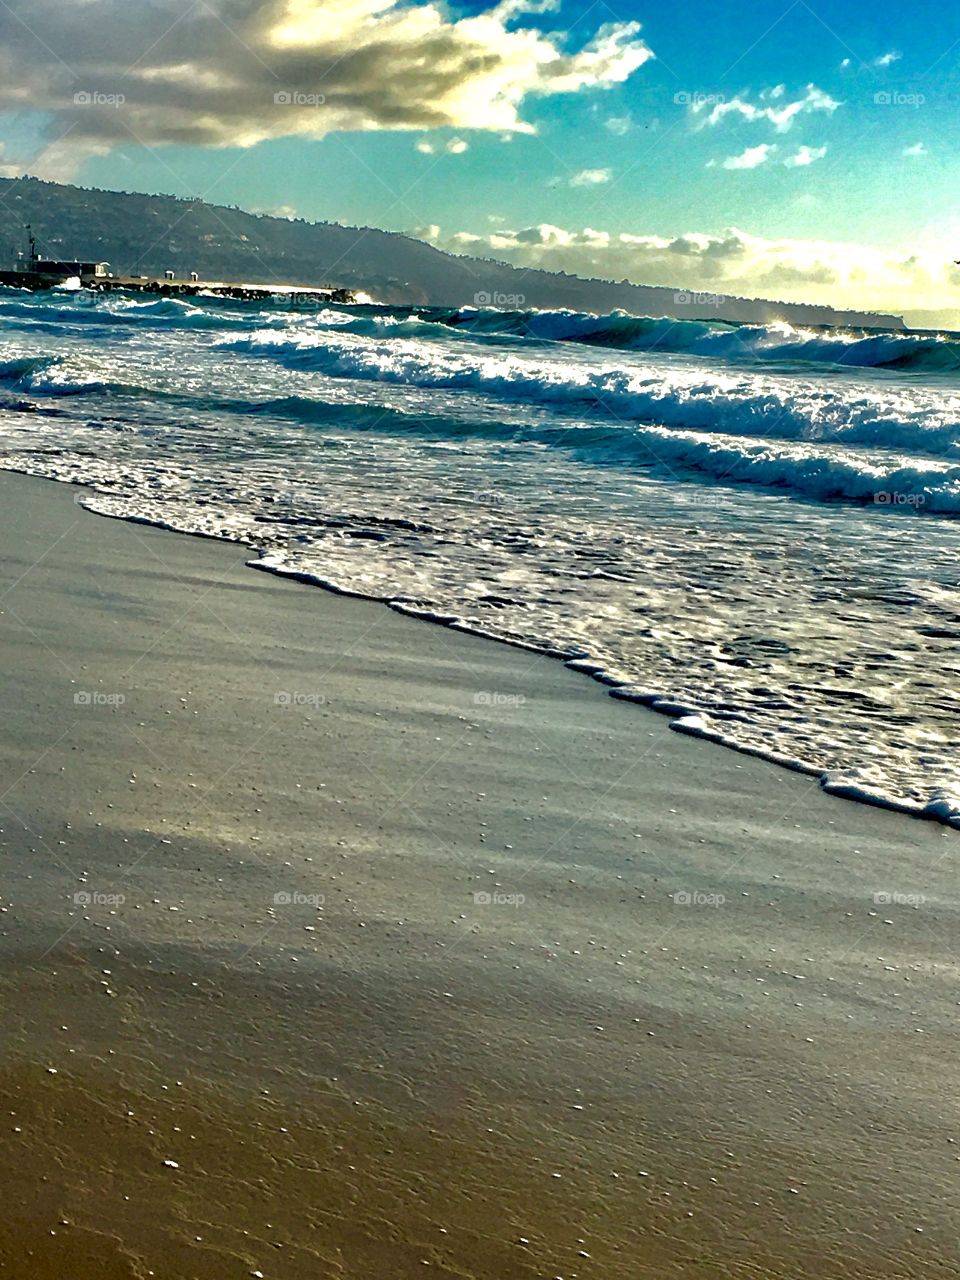 Where sand meets the Pacific Ocean